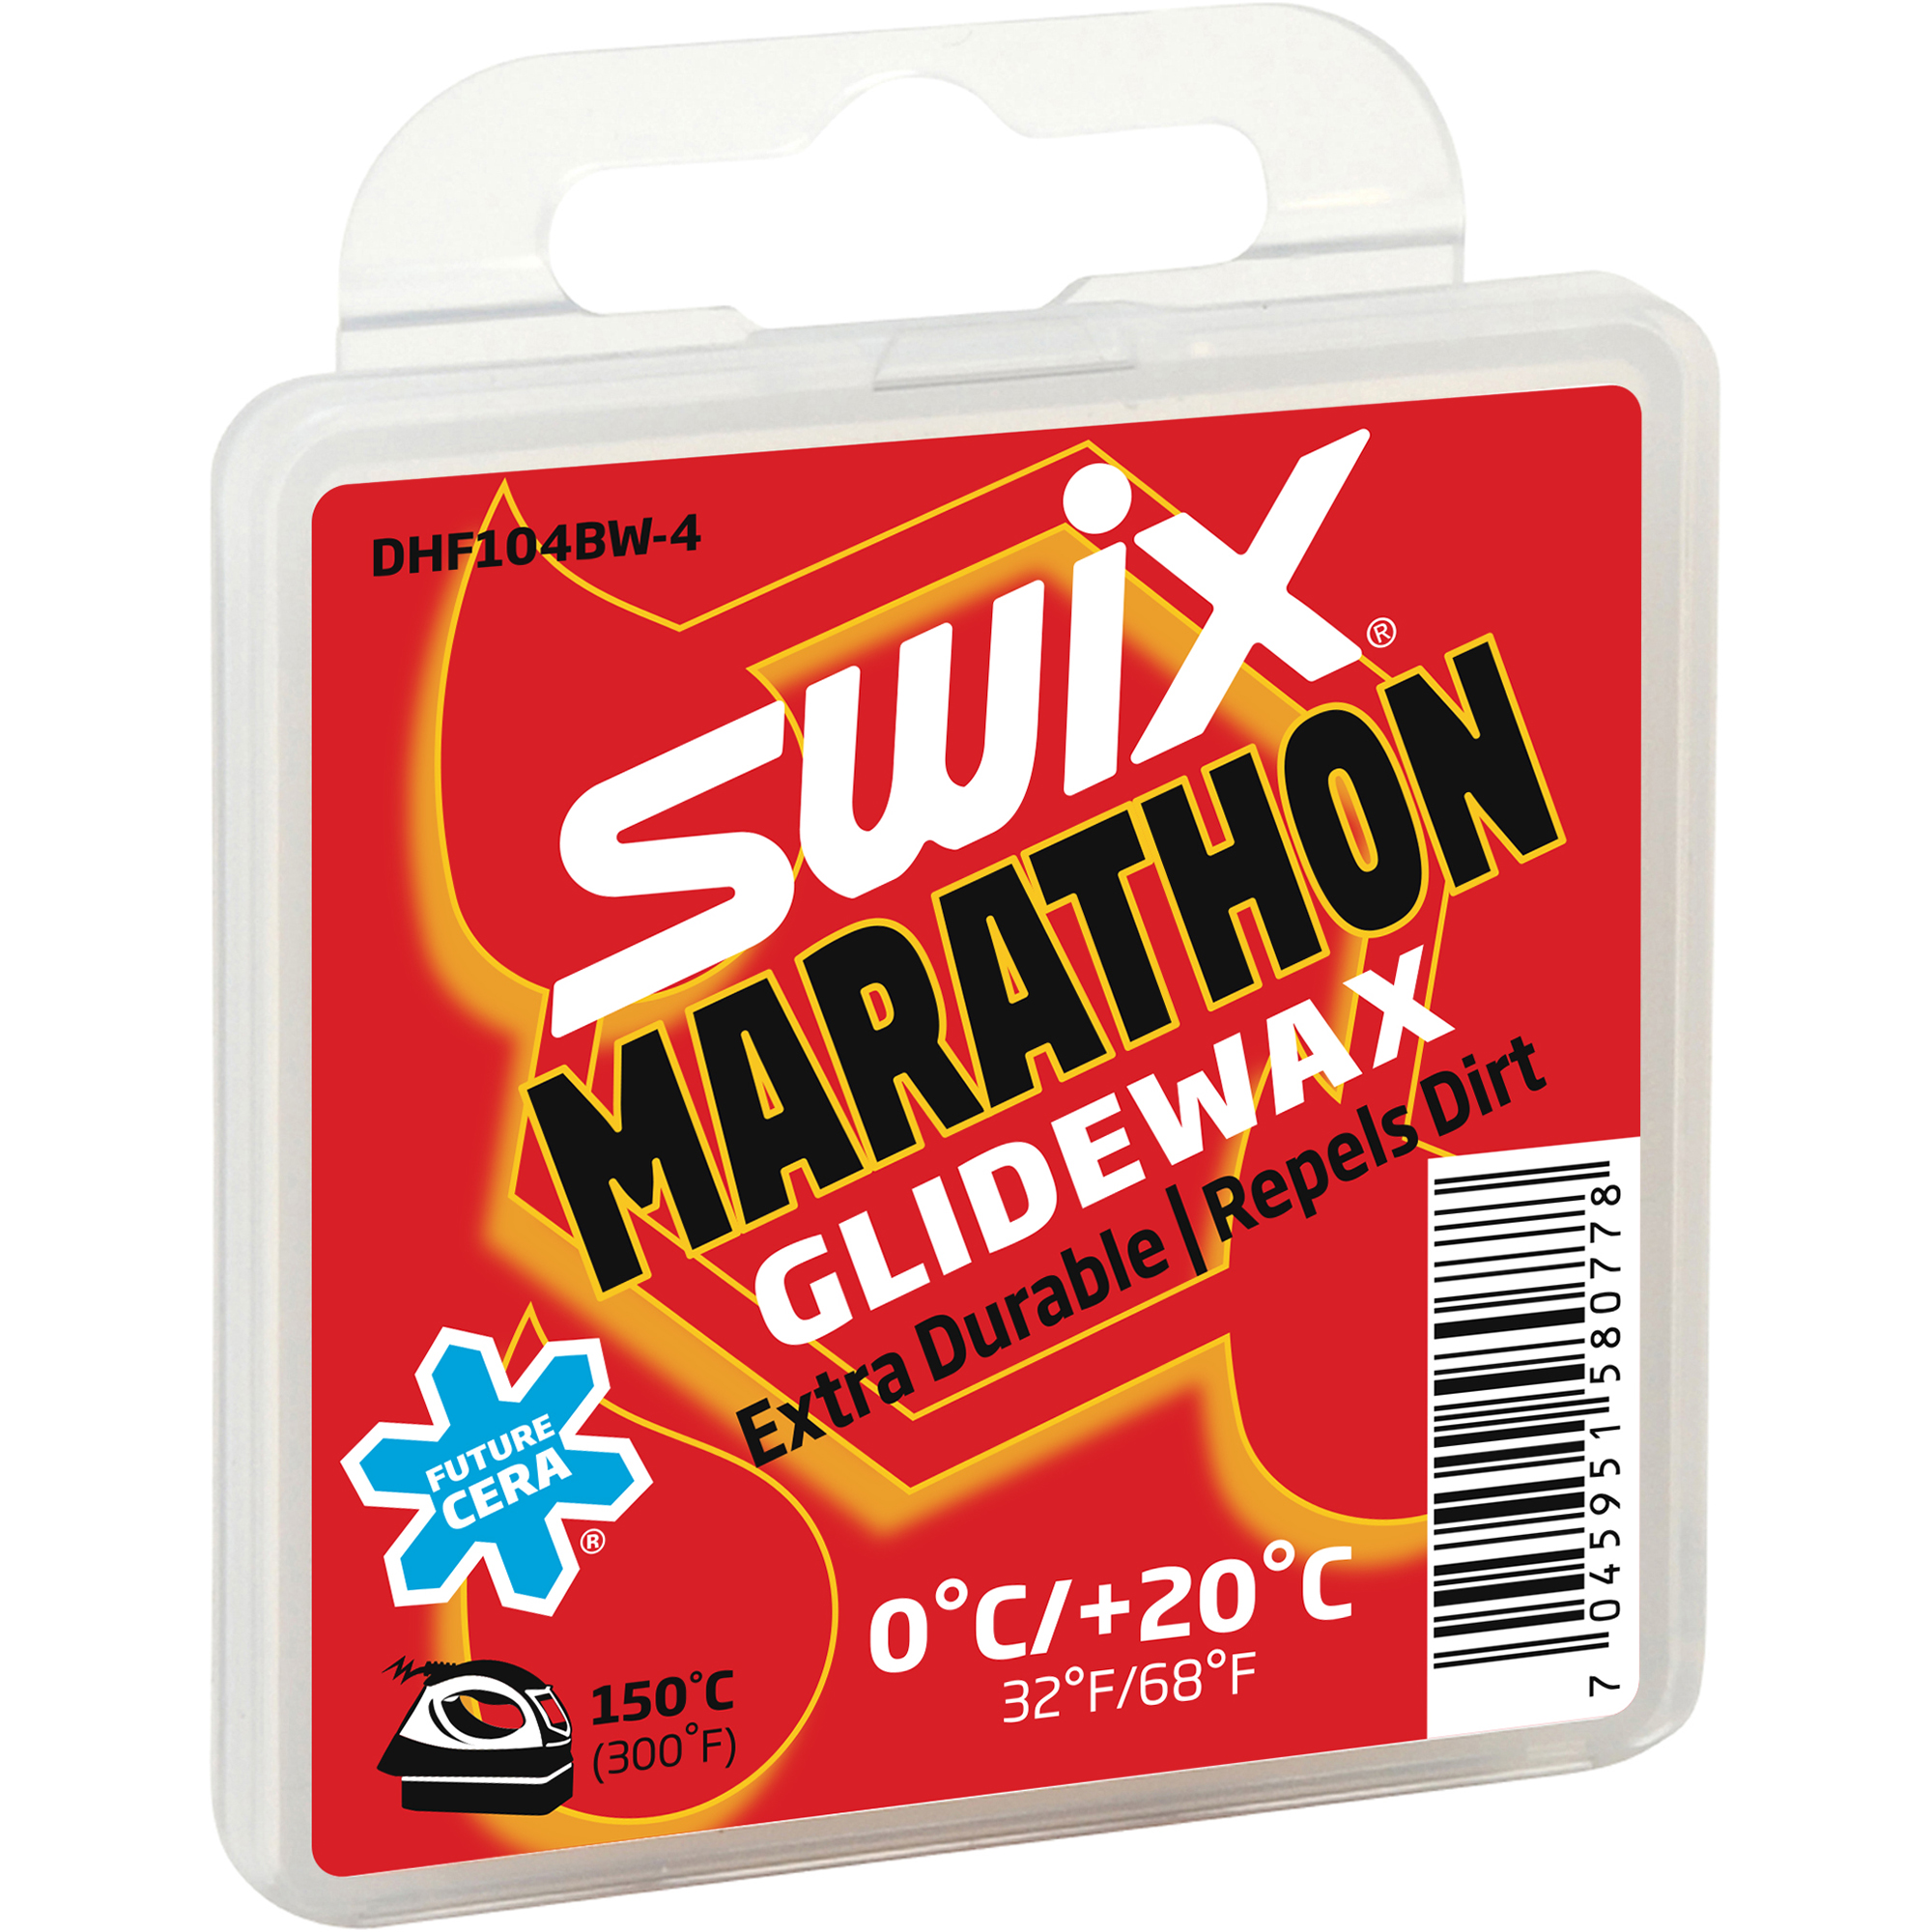 SWIX DHF104 Marathon red, 40g